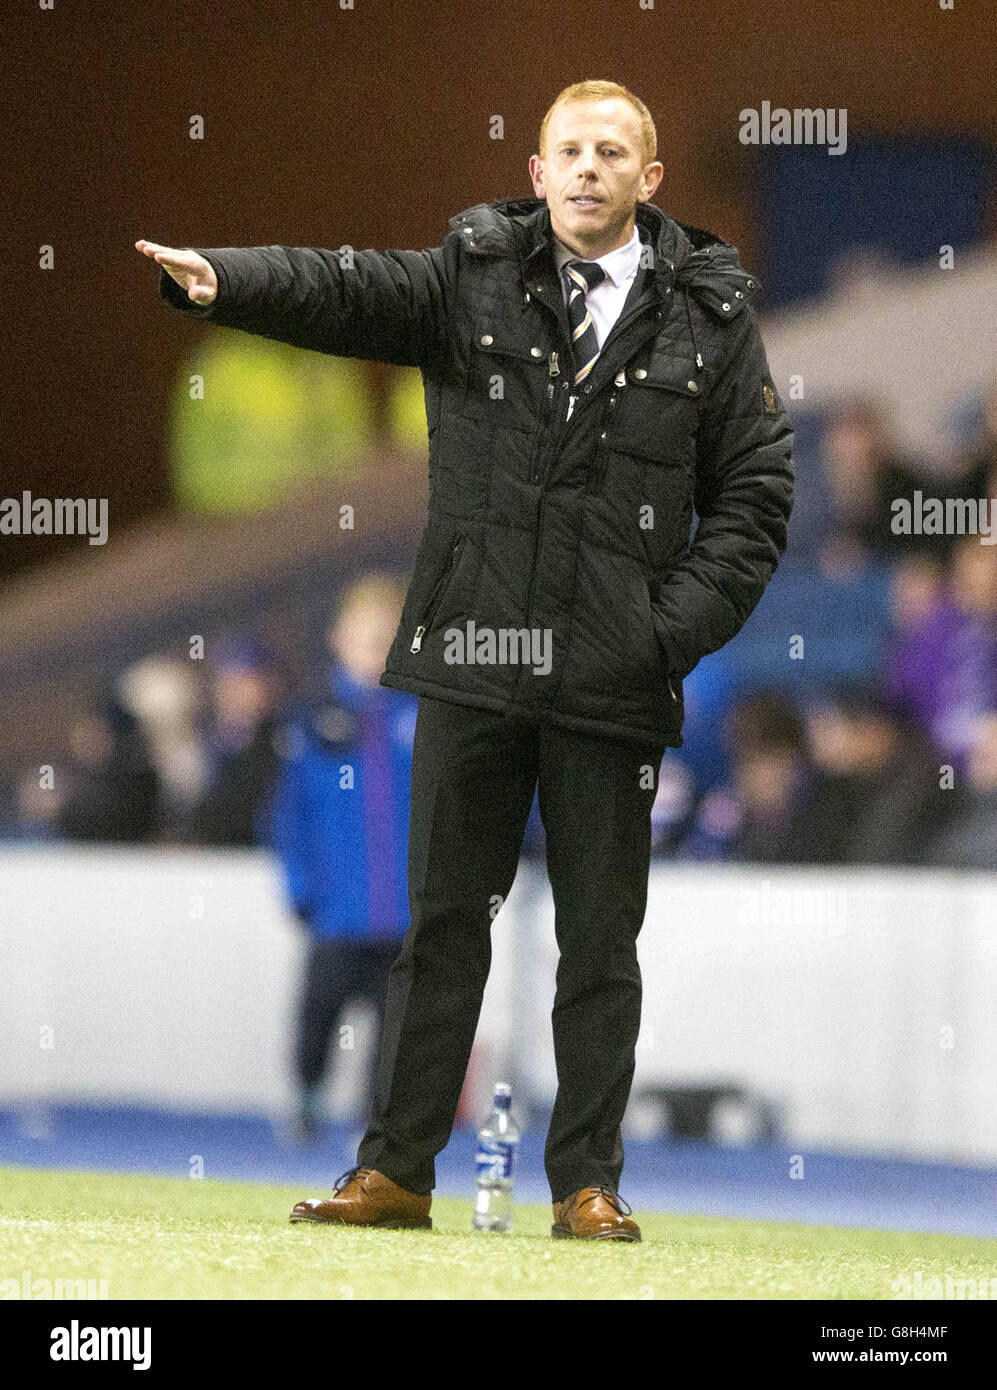 Dumbarton manager Steve Aitken during the Ladbrokes Scottish Championship match at Ibrox Stadium, Glasgow. Stock Photo